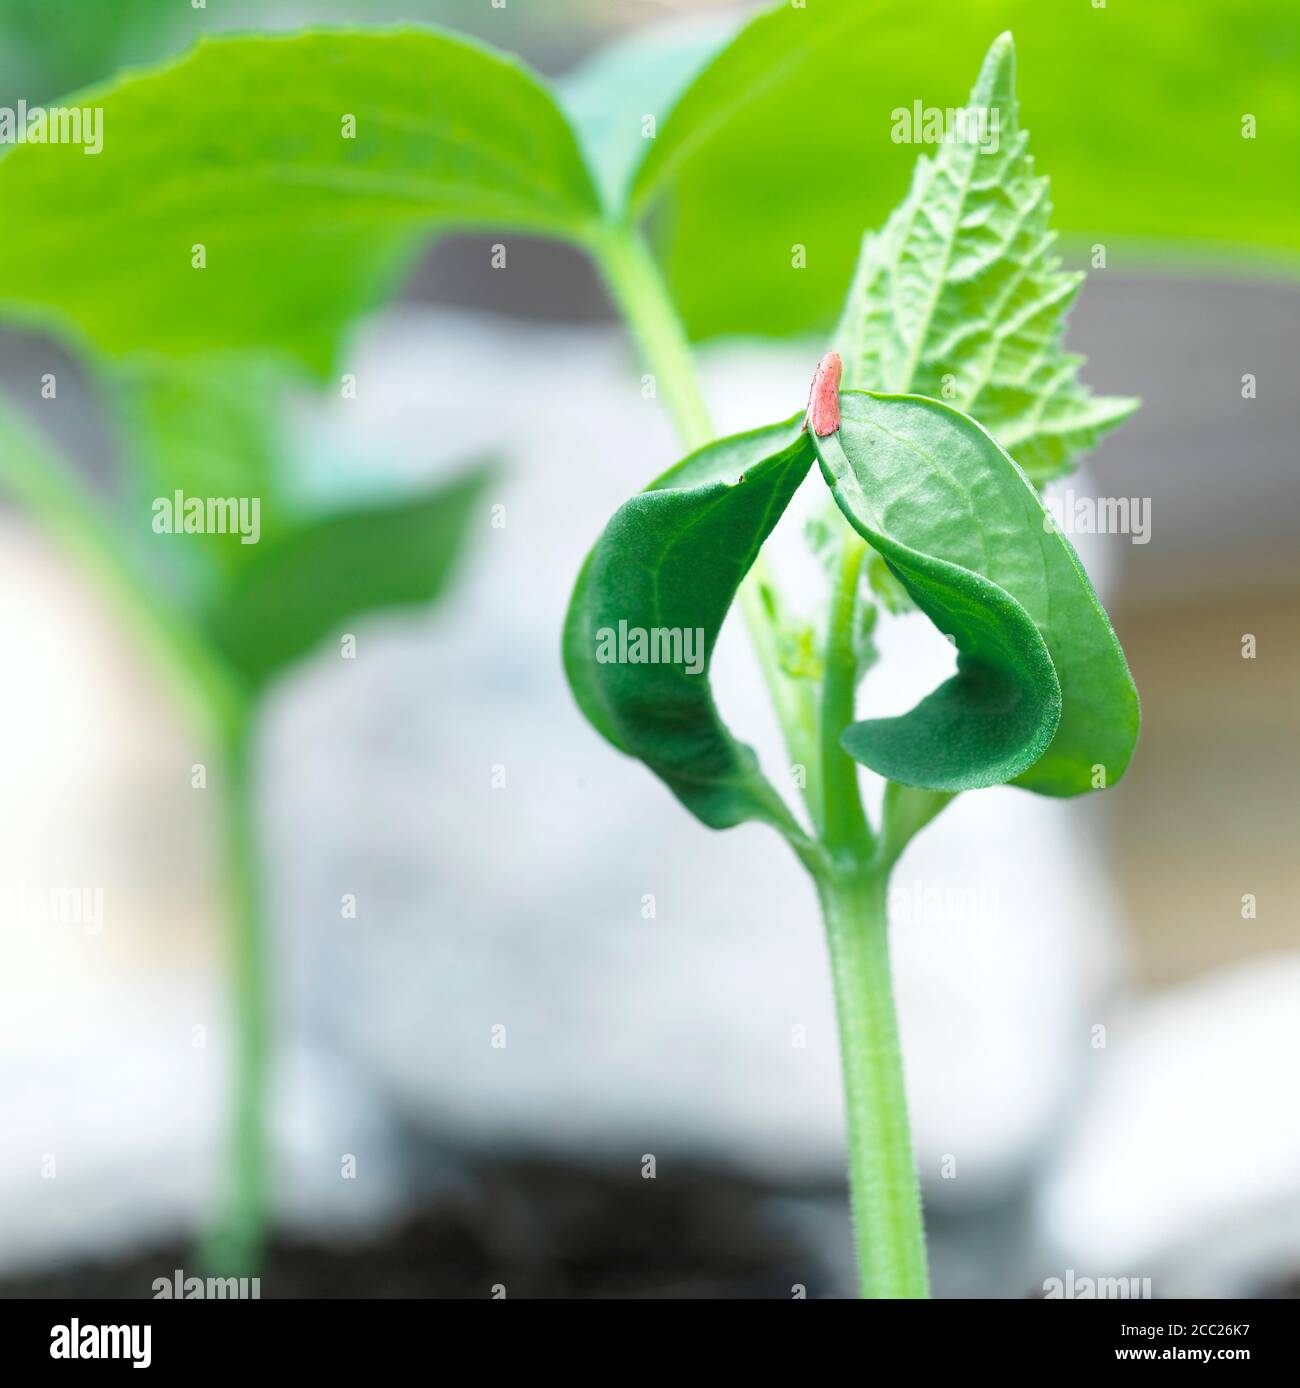 Cucumber plant, close-up Stock Photo